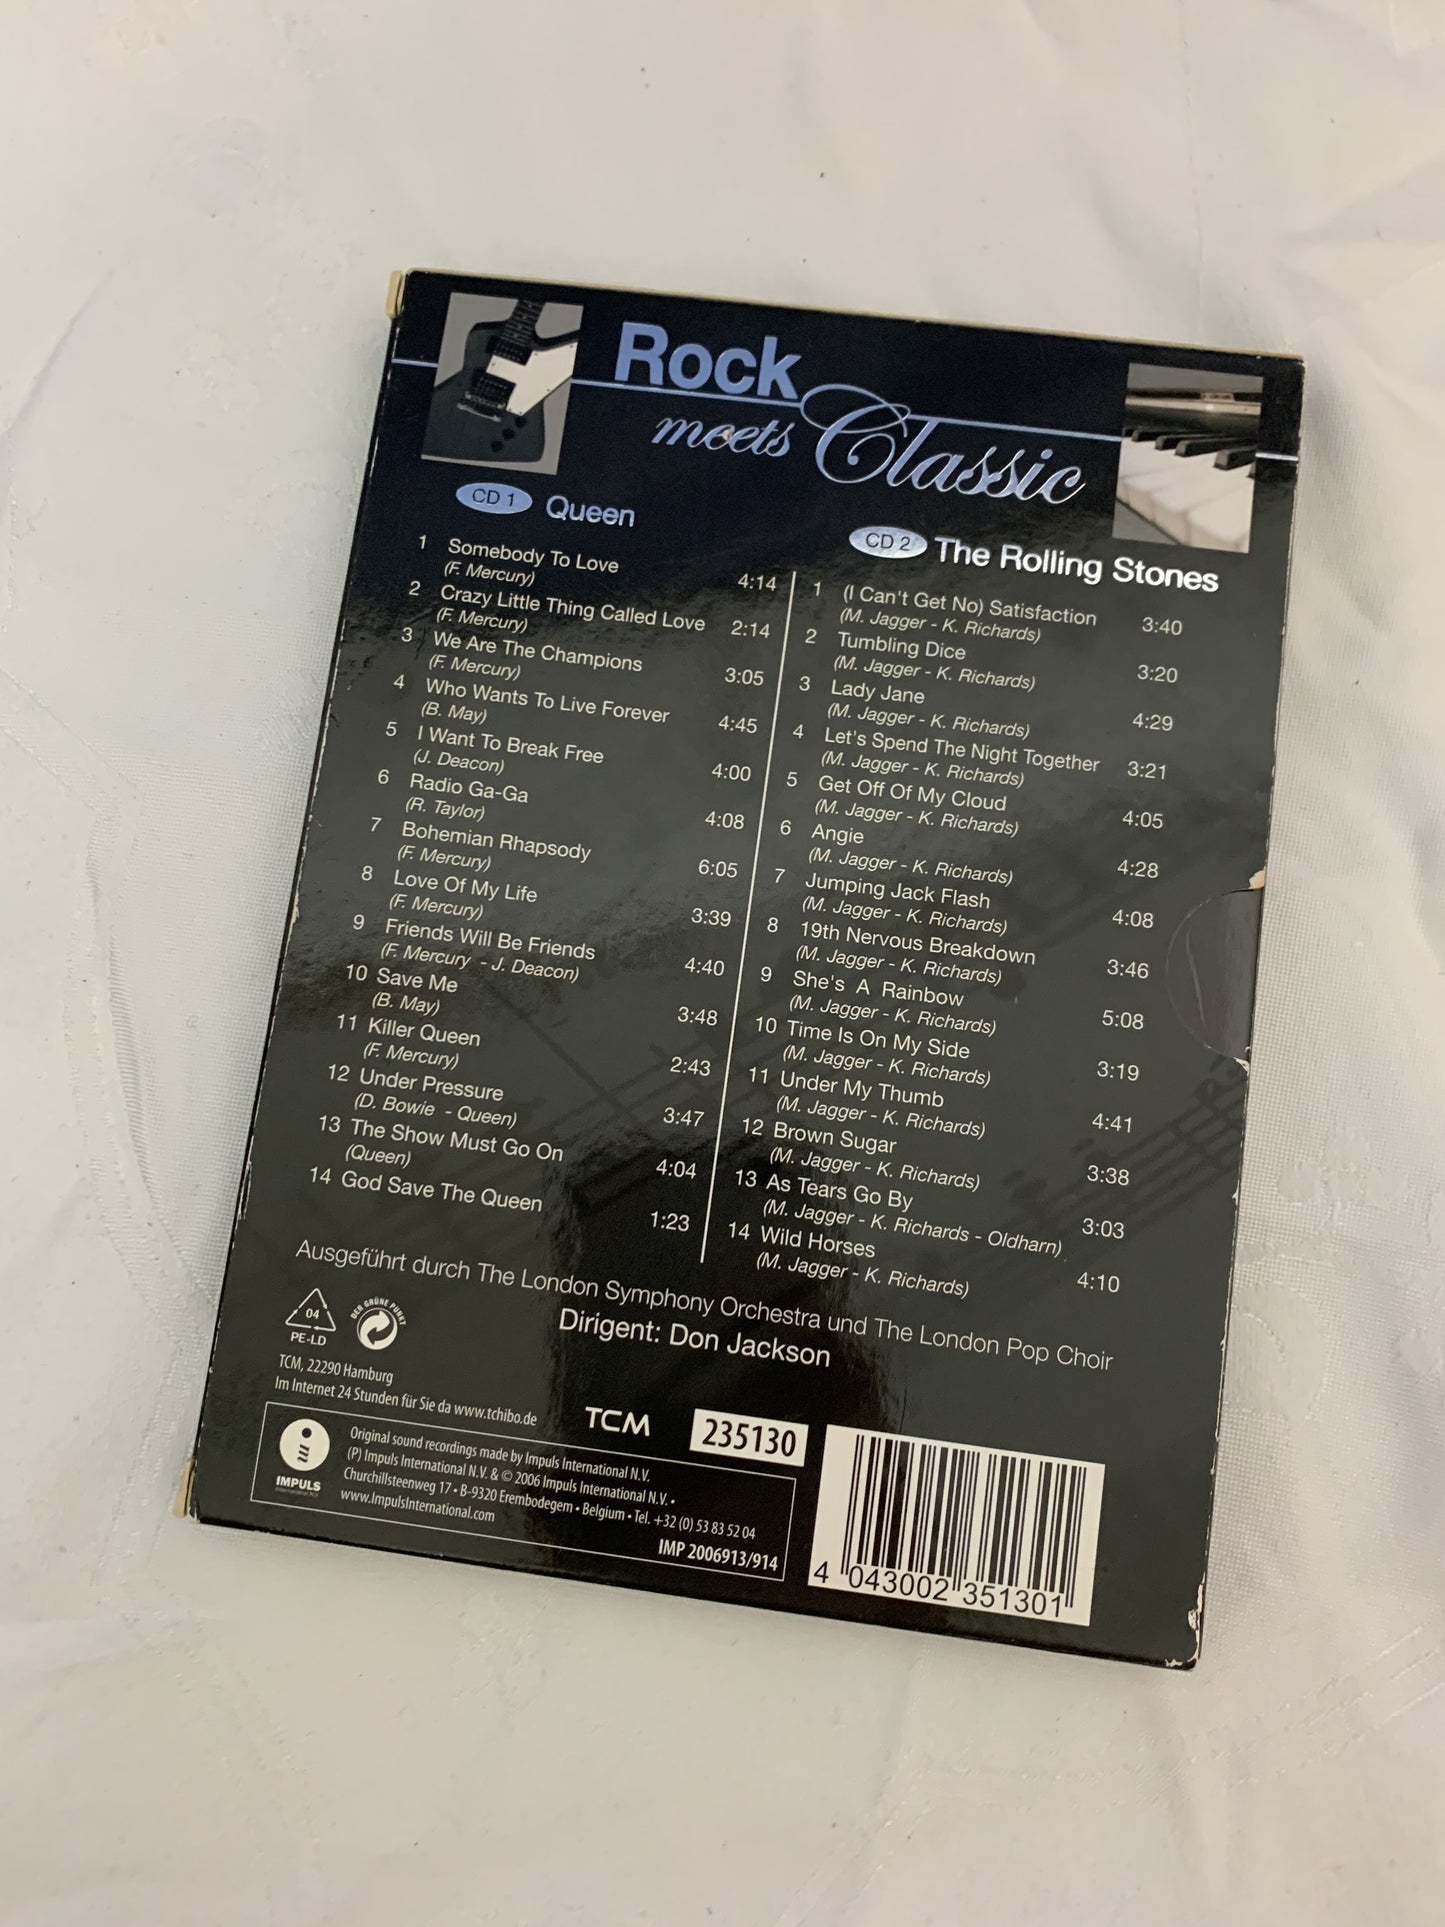 Rock meets Classic -The Rolling Stones Queen CD Box